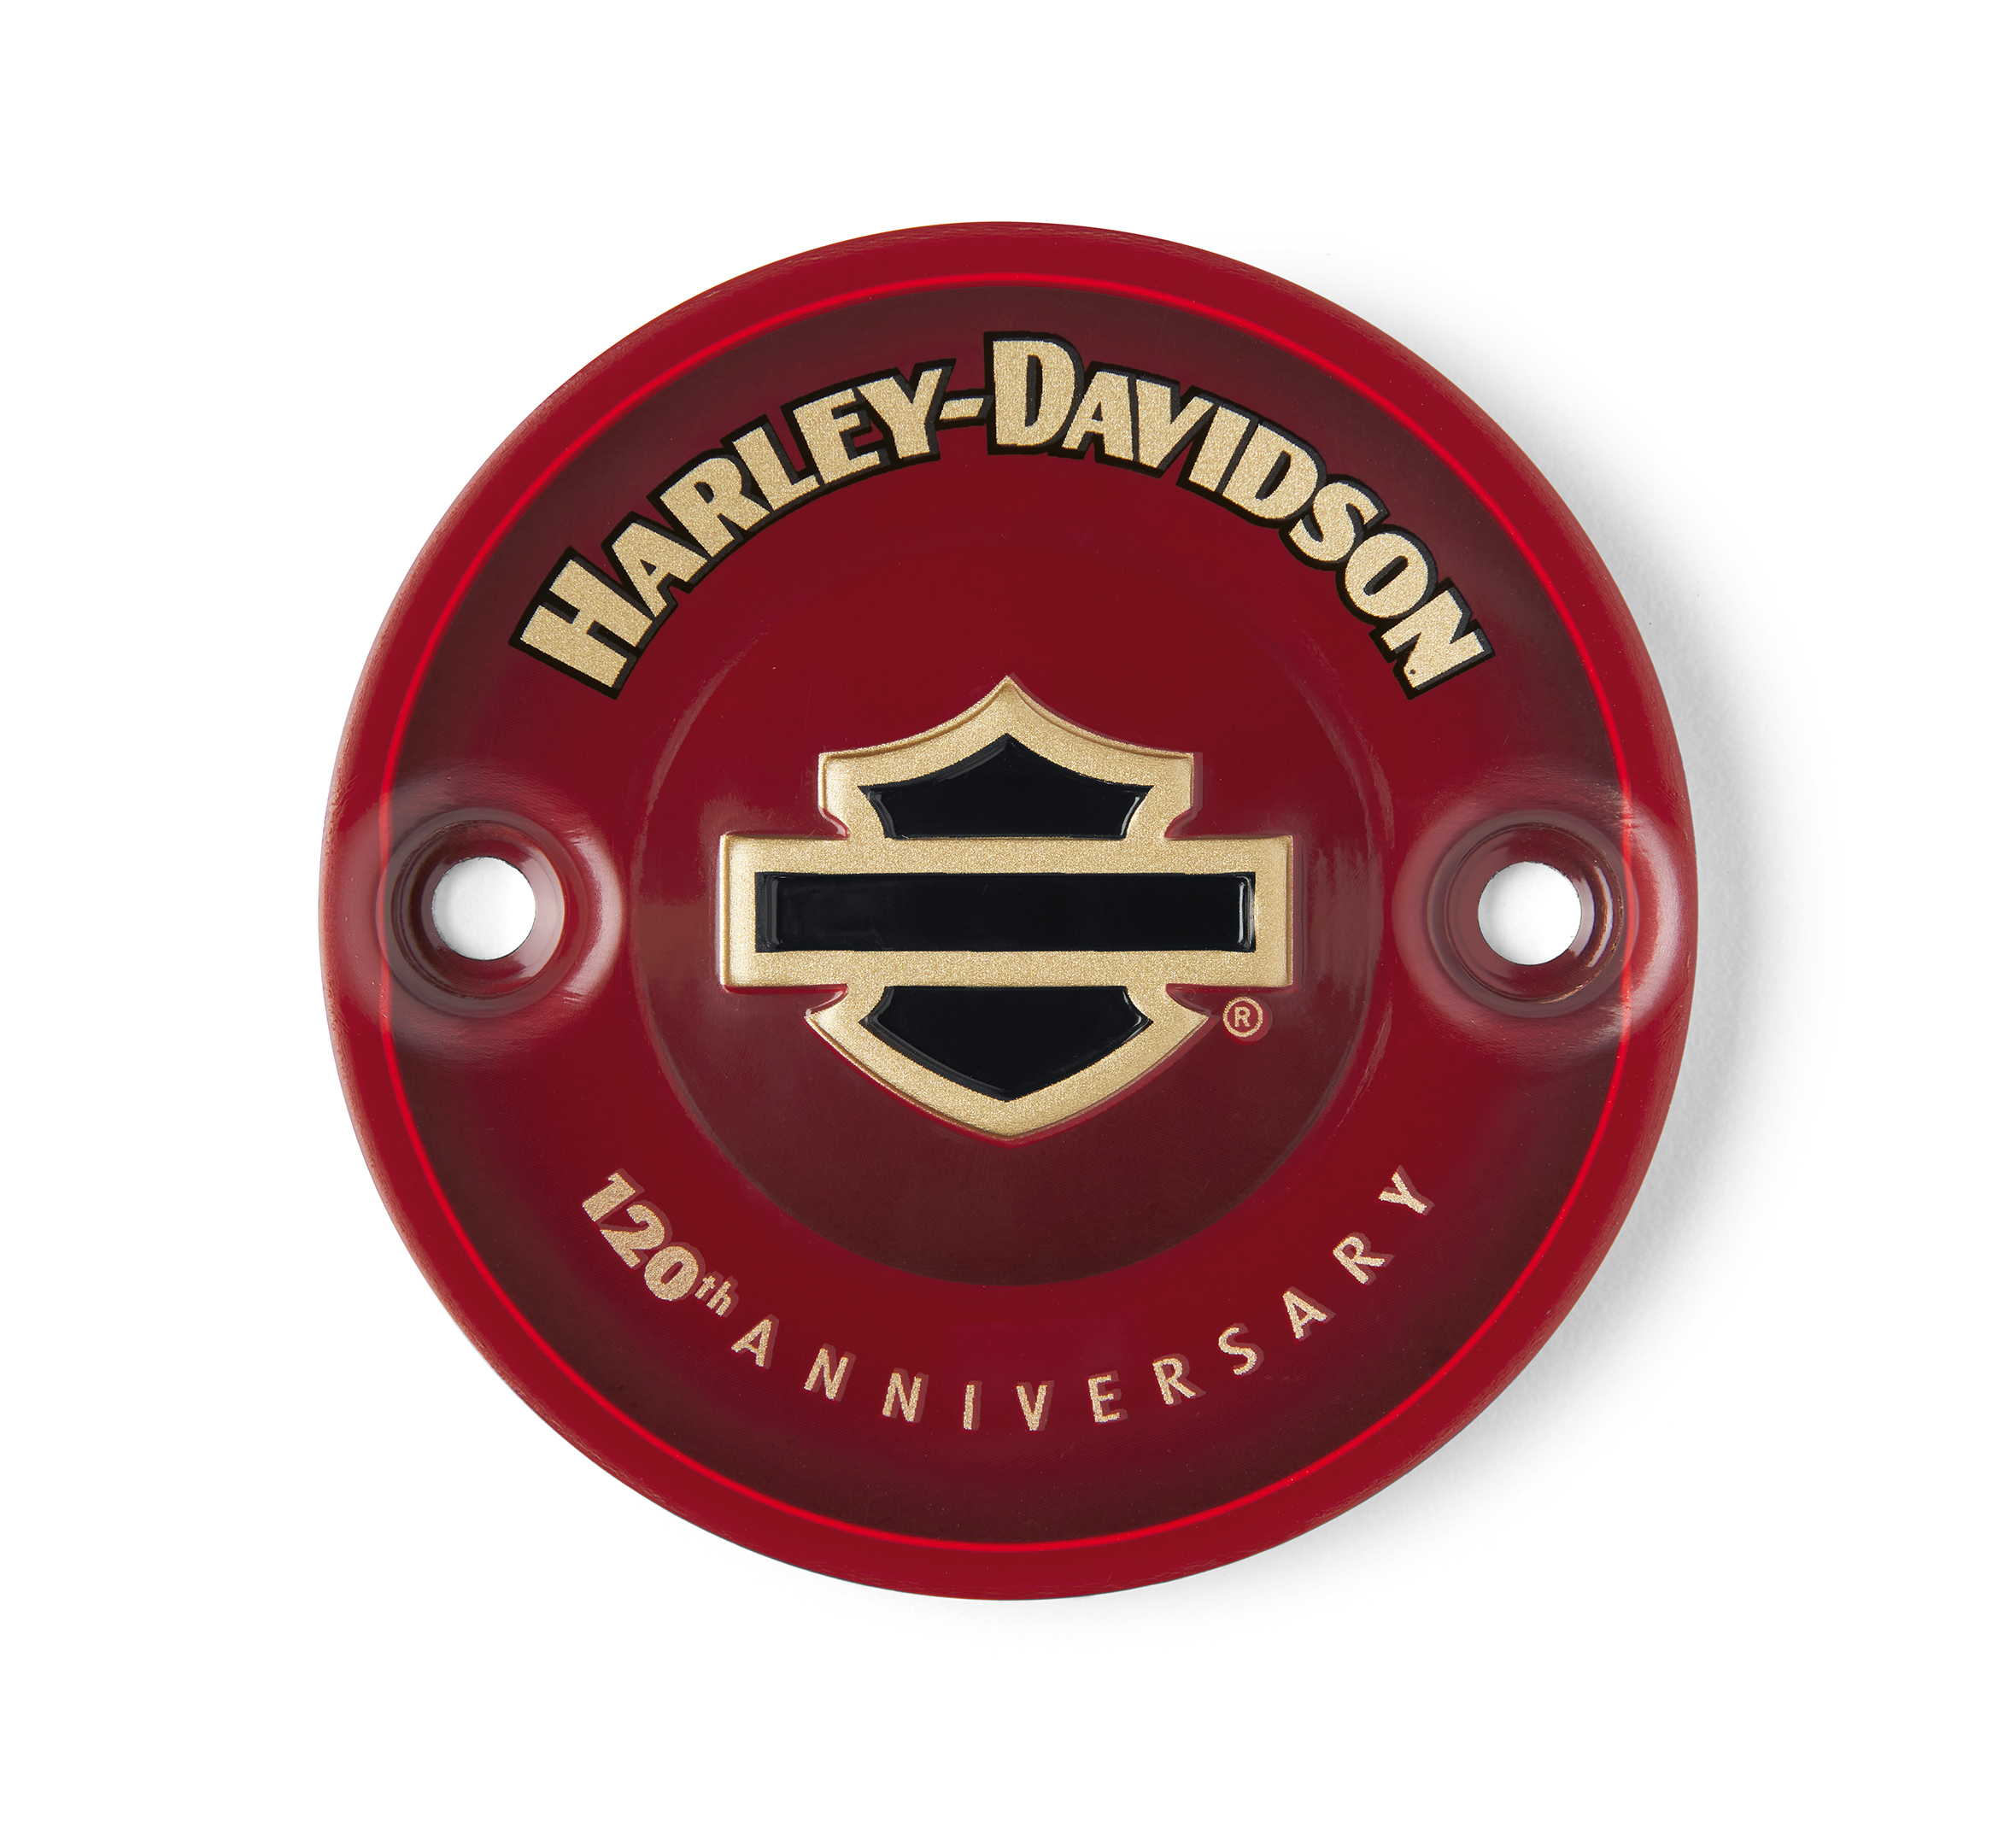 120th Anniversary Timer Cover 25600176 | Harley-Davidson USA